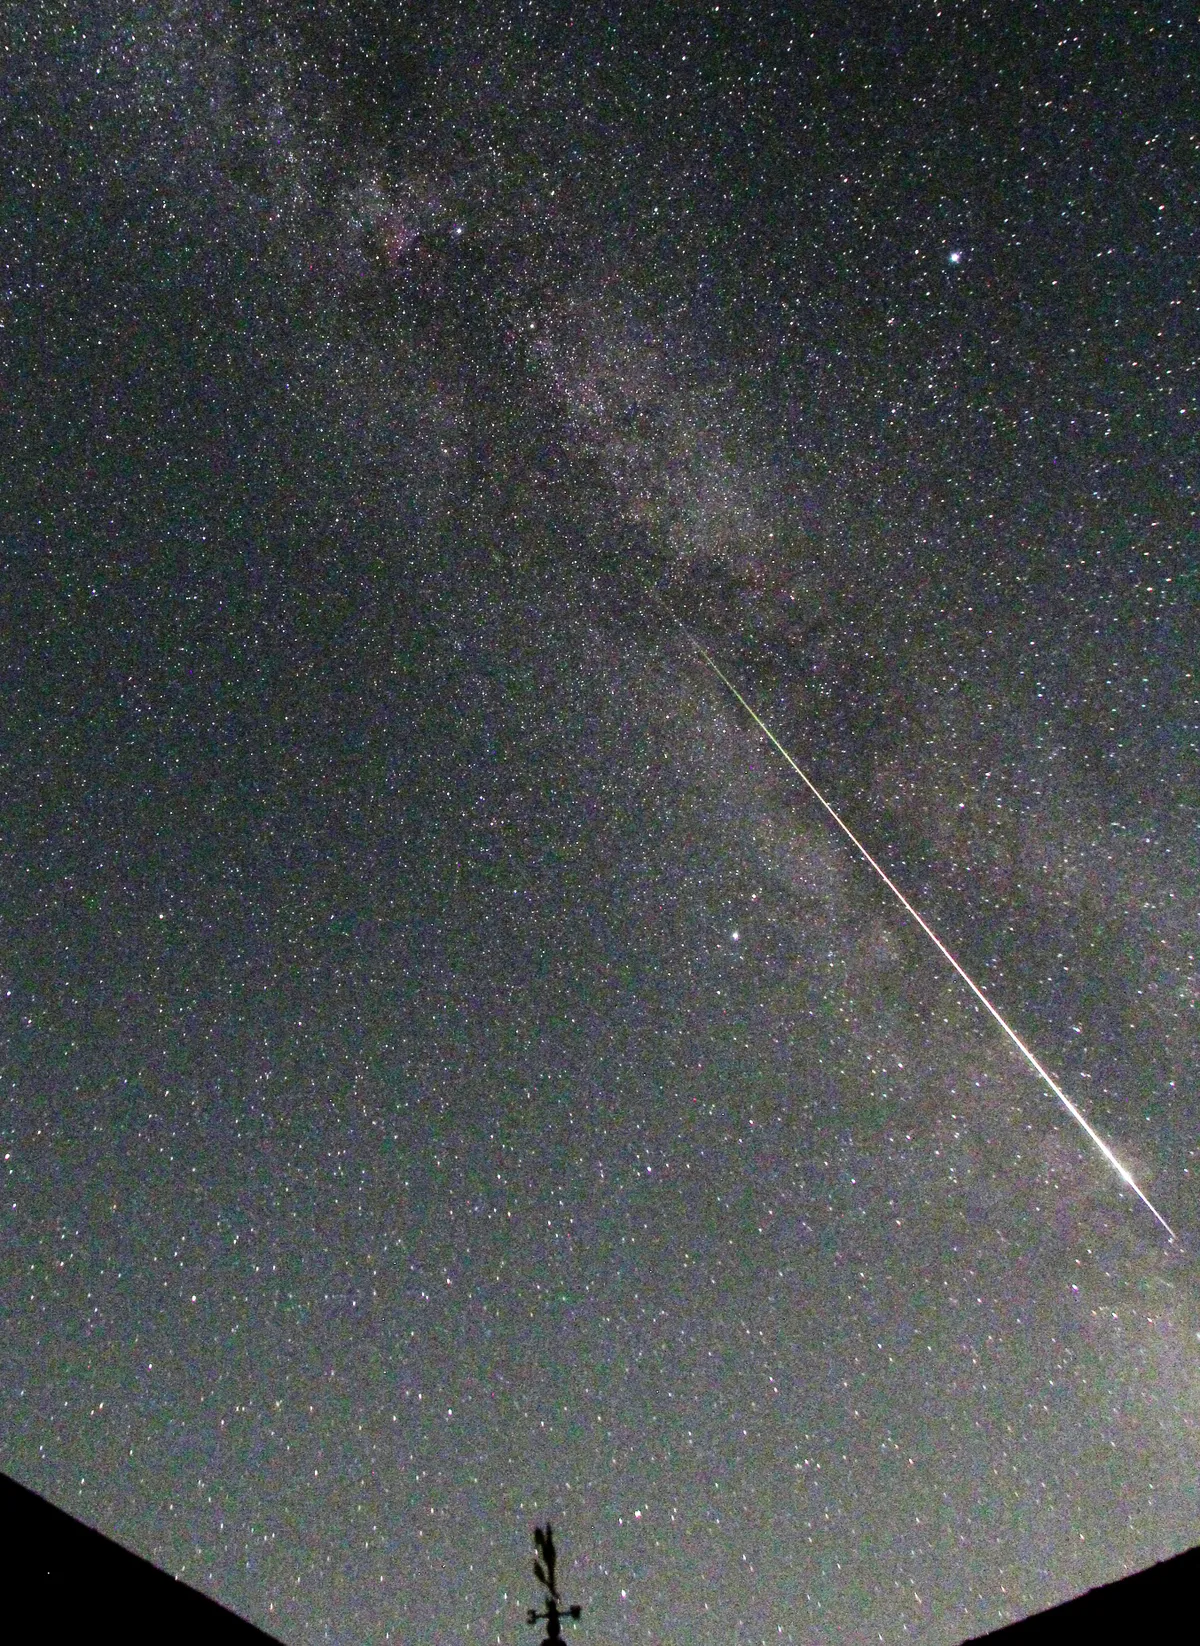 Perseid Meteor by John Elder, UK. Equipment: Canon 60Da